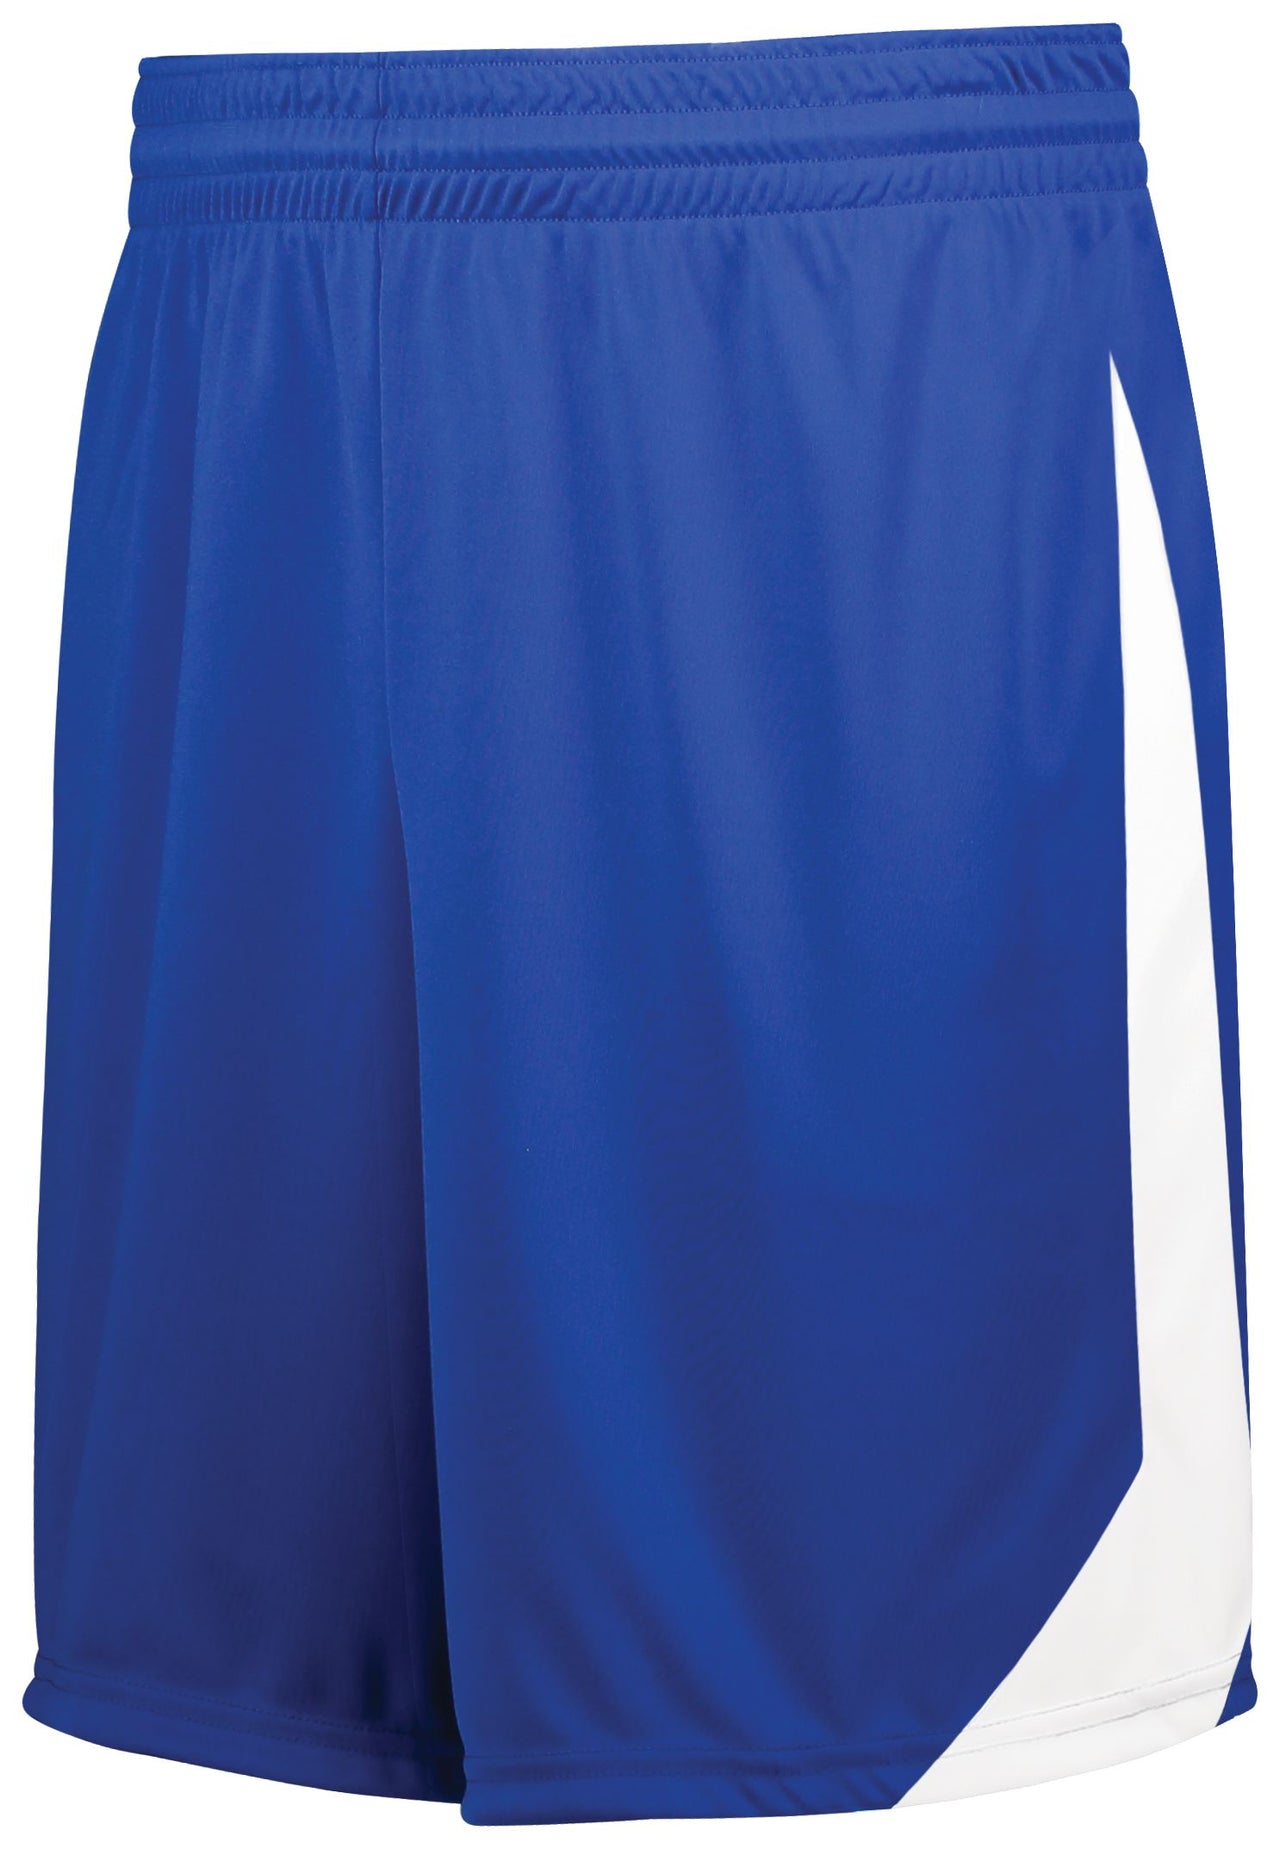 Athletico Shorts - 325450